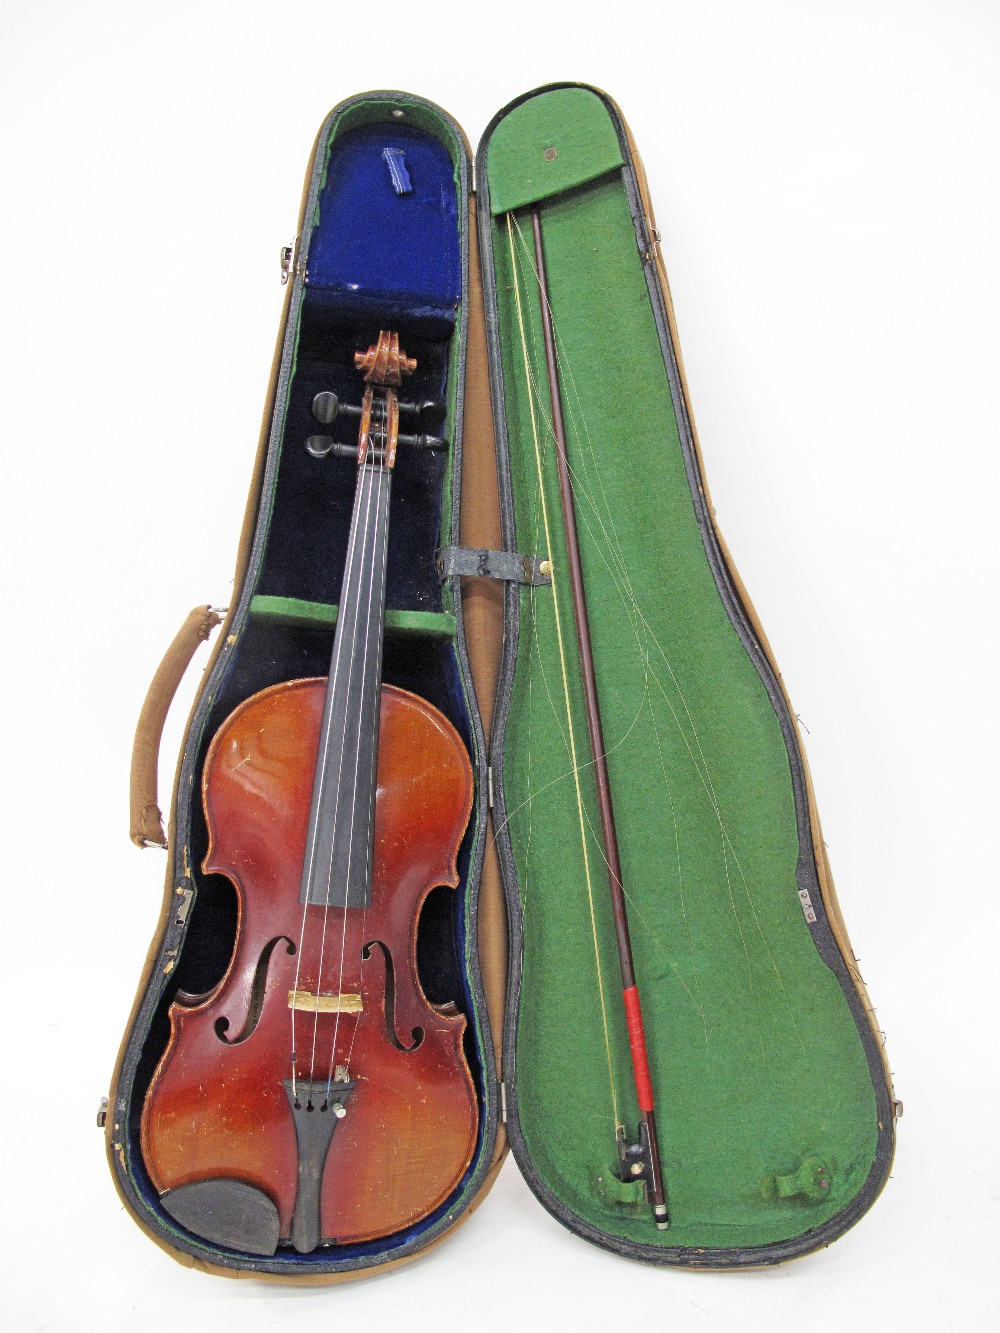 An early 20th century Stradivarius violin copy